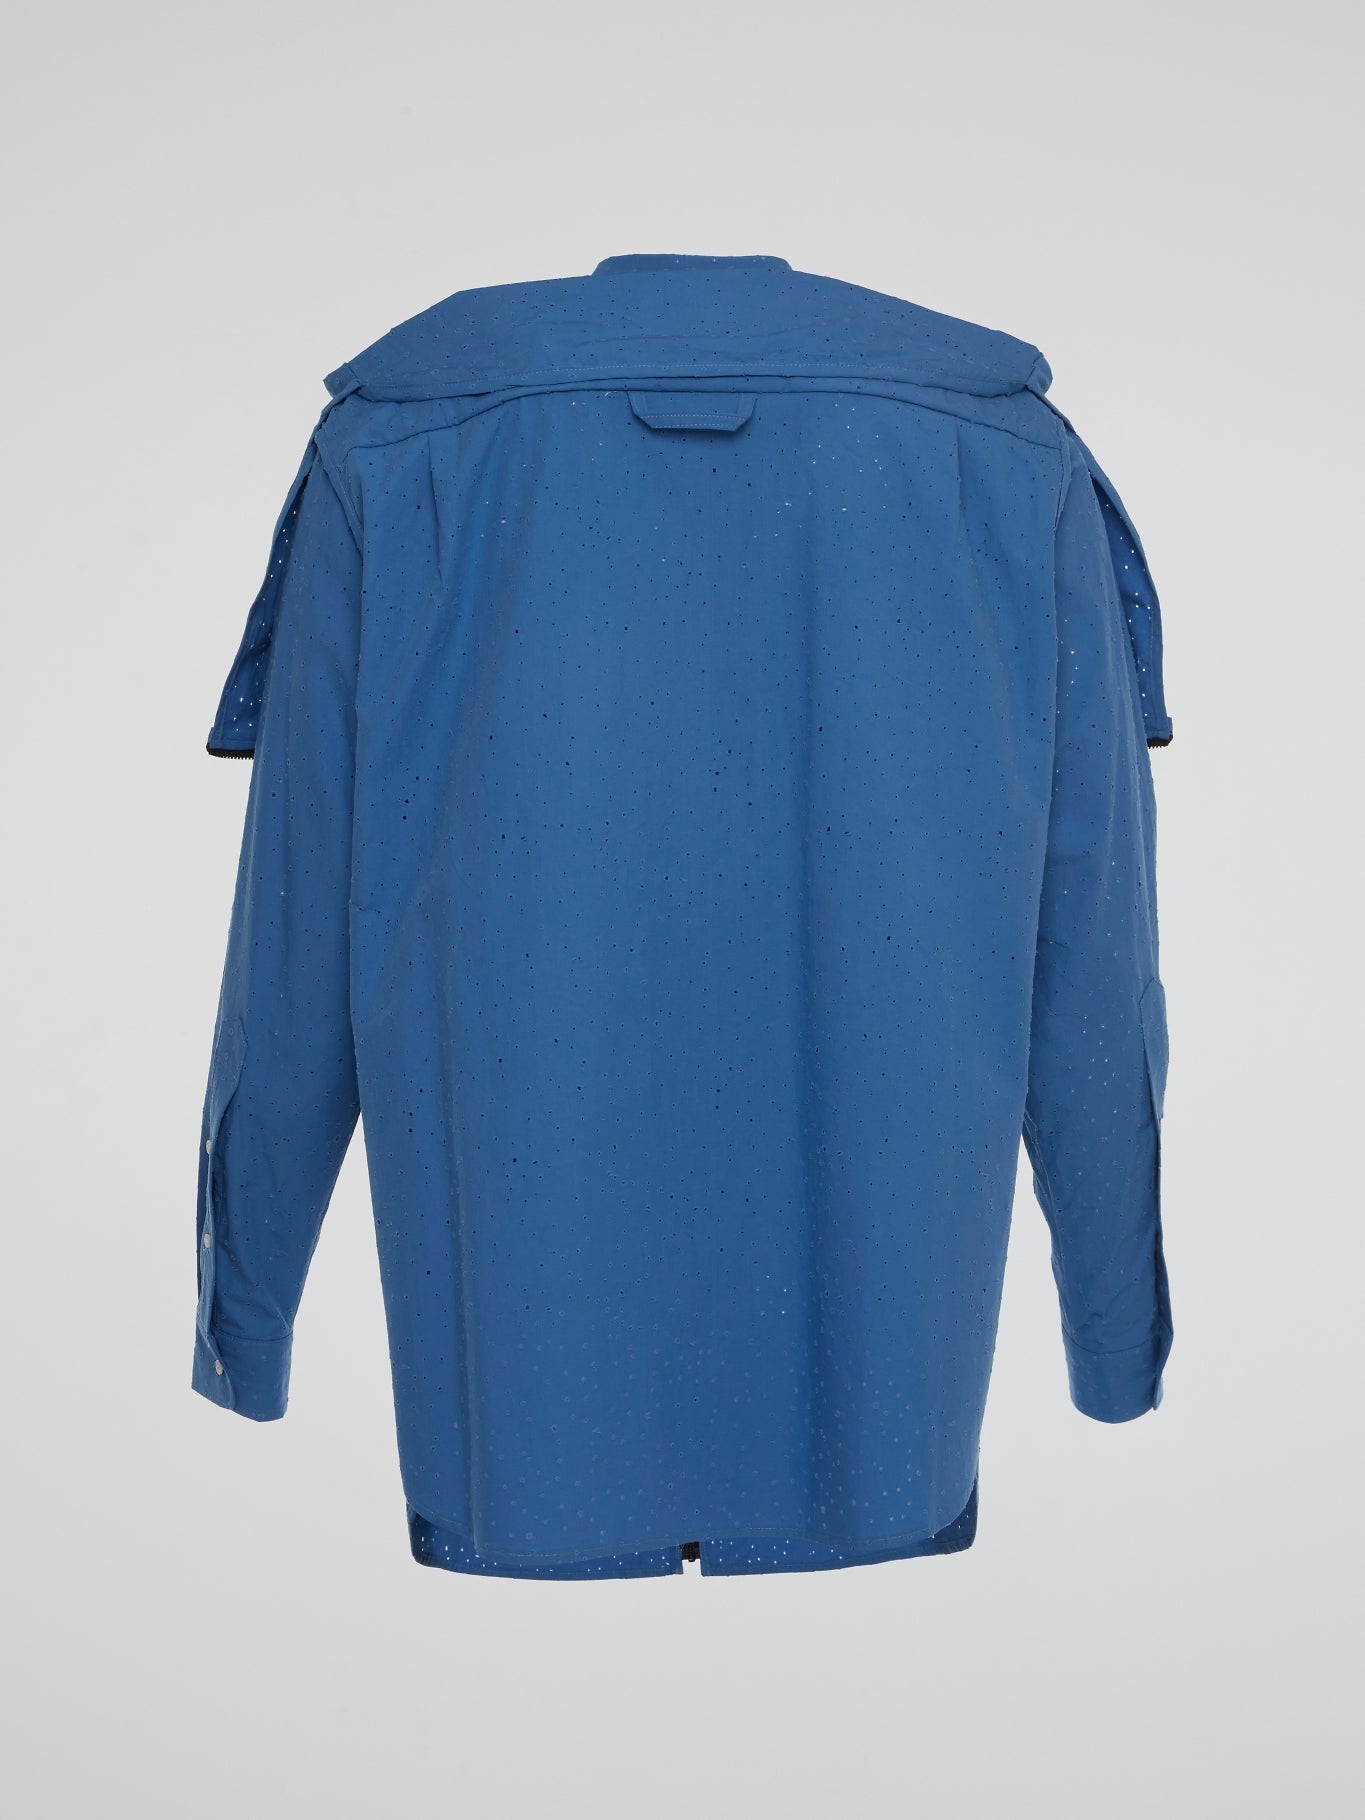 Blue Layered Perforated Shirt